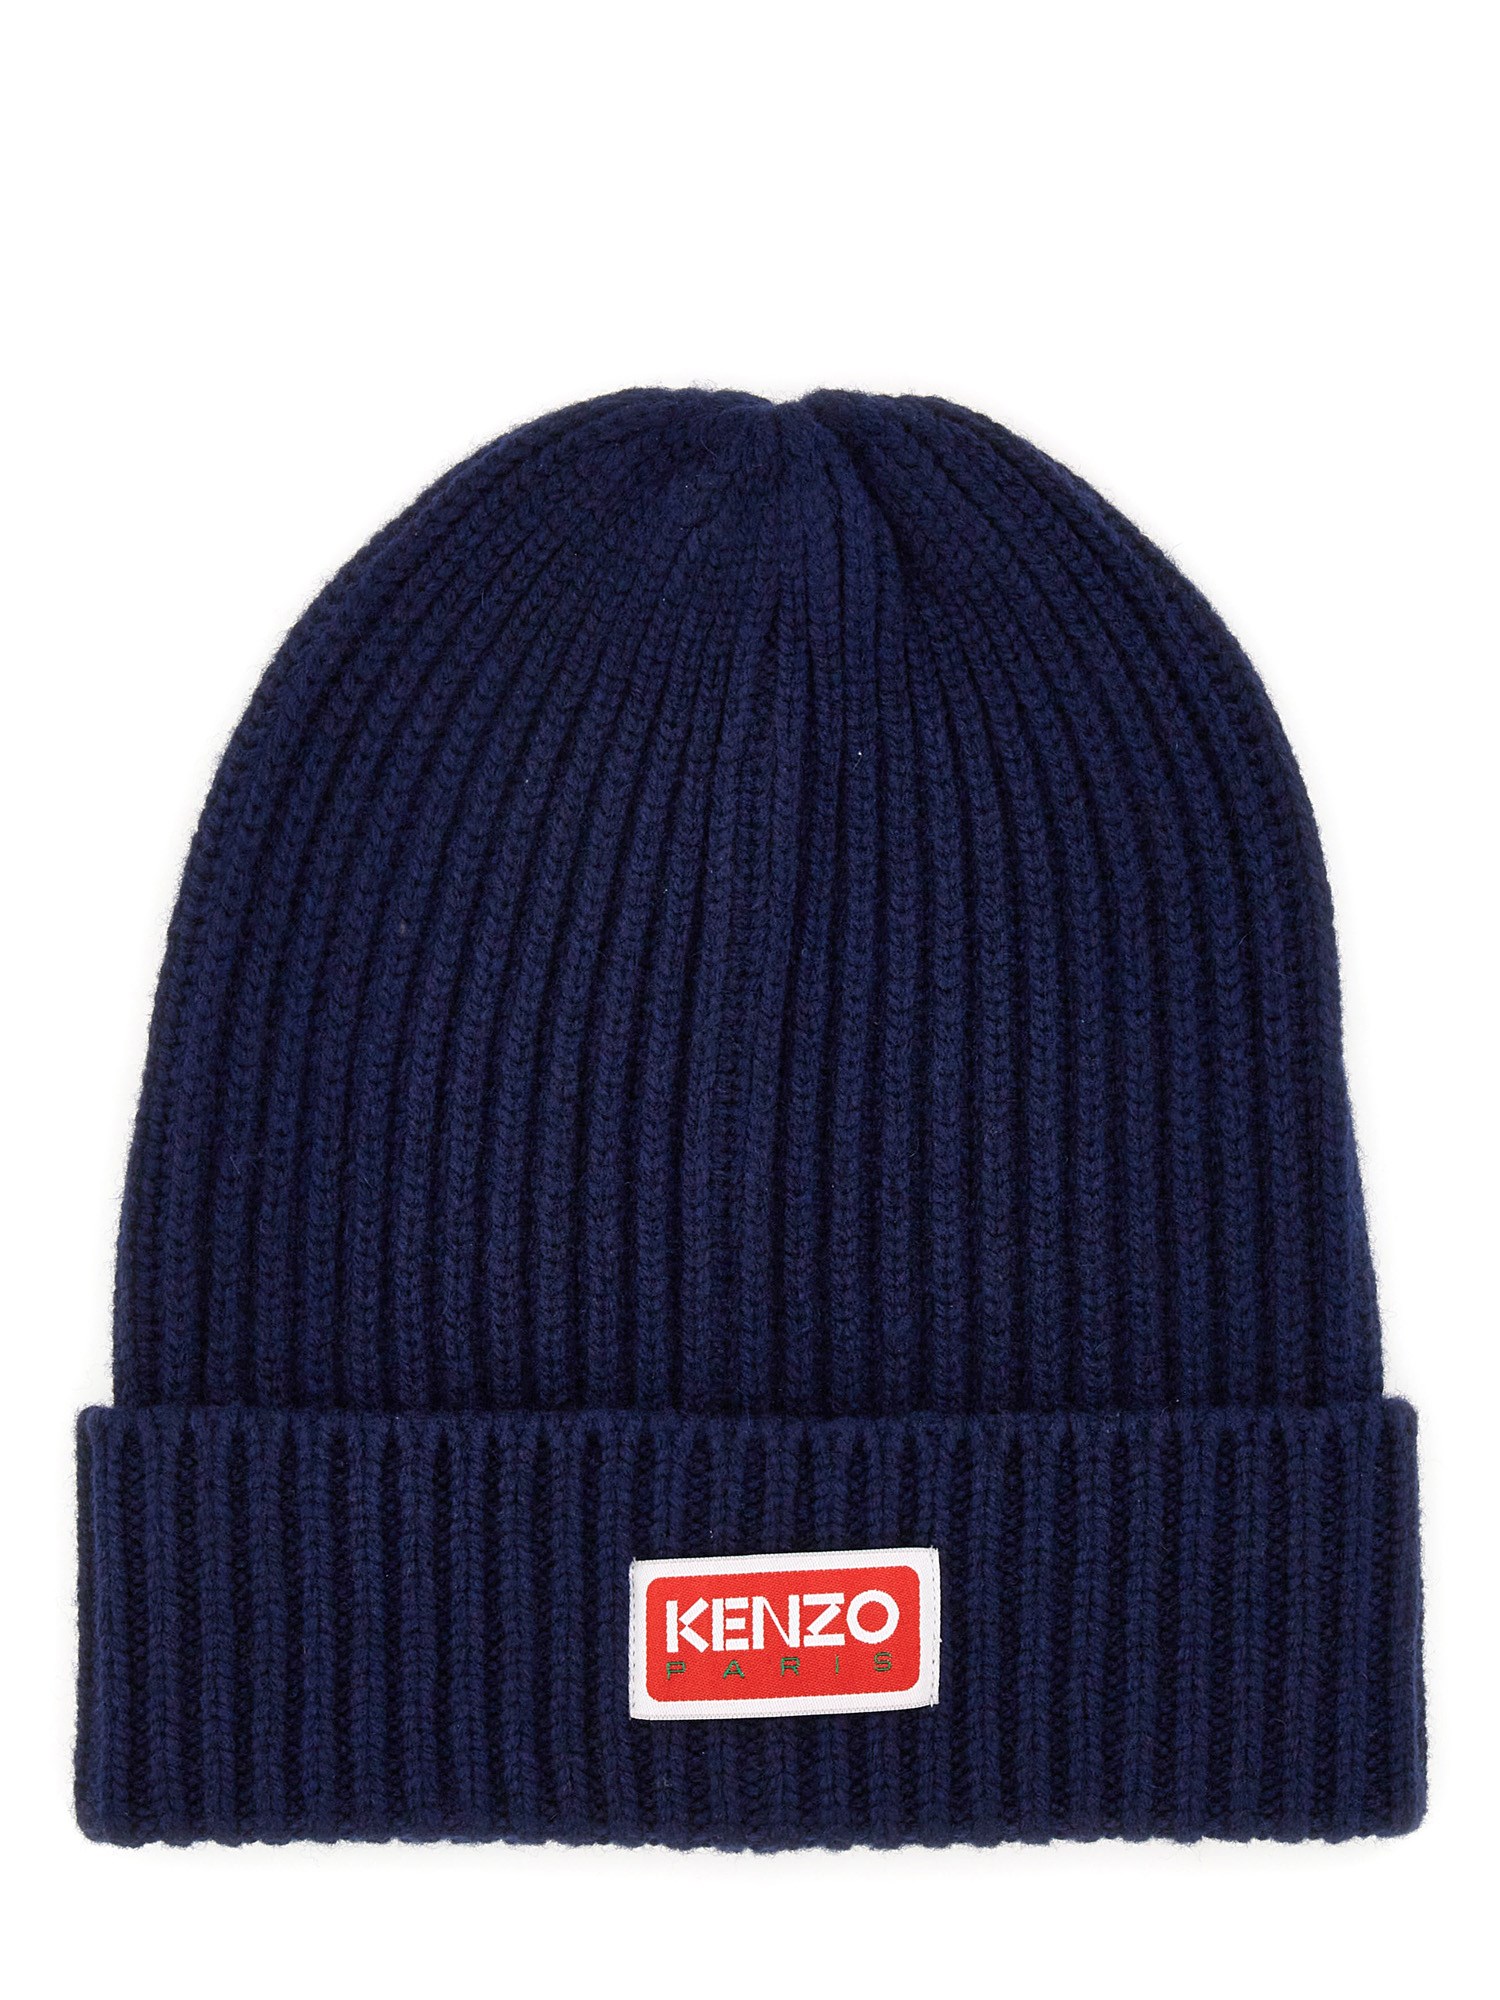 kenzo knit hat with logo